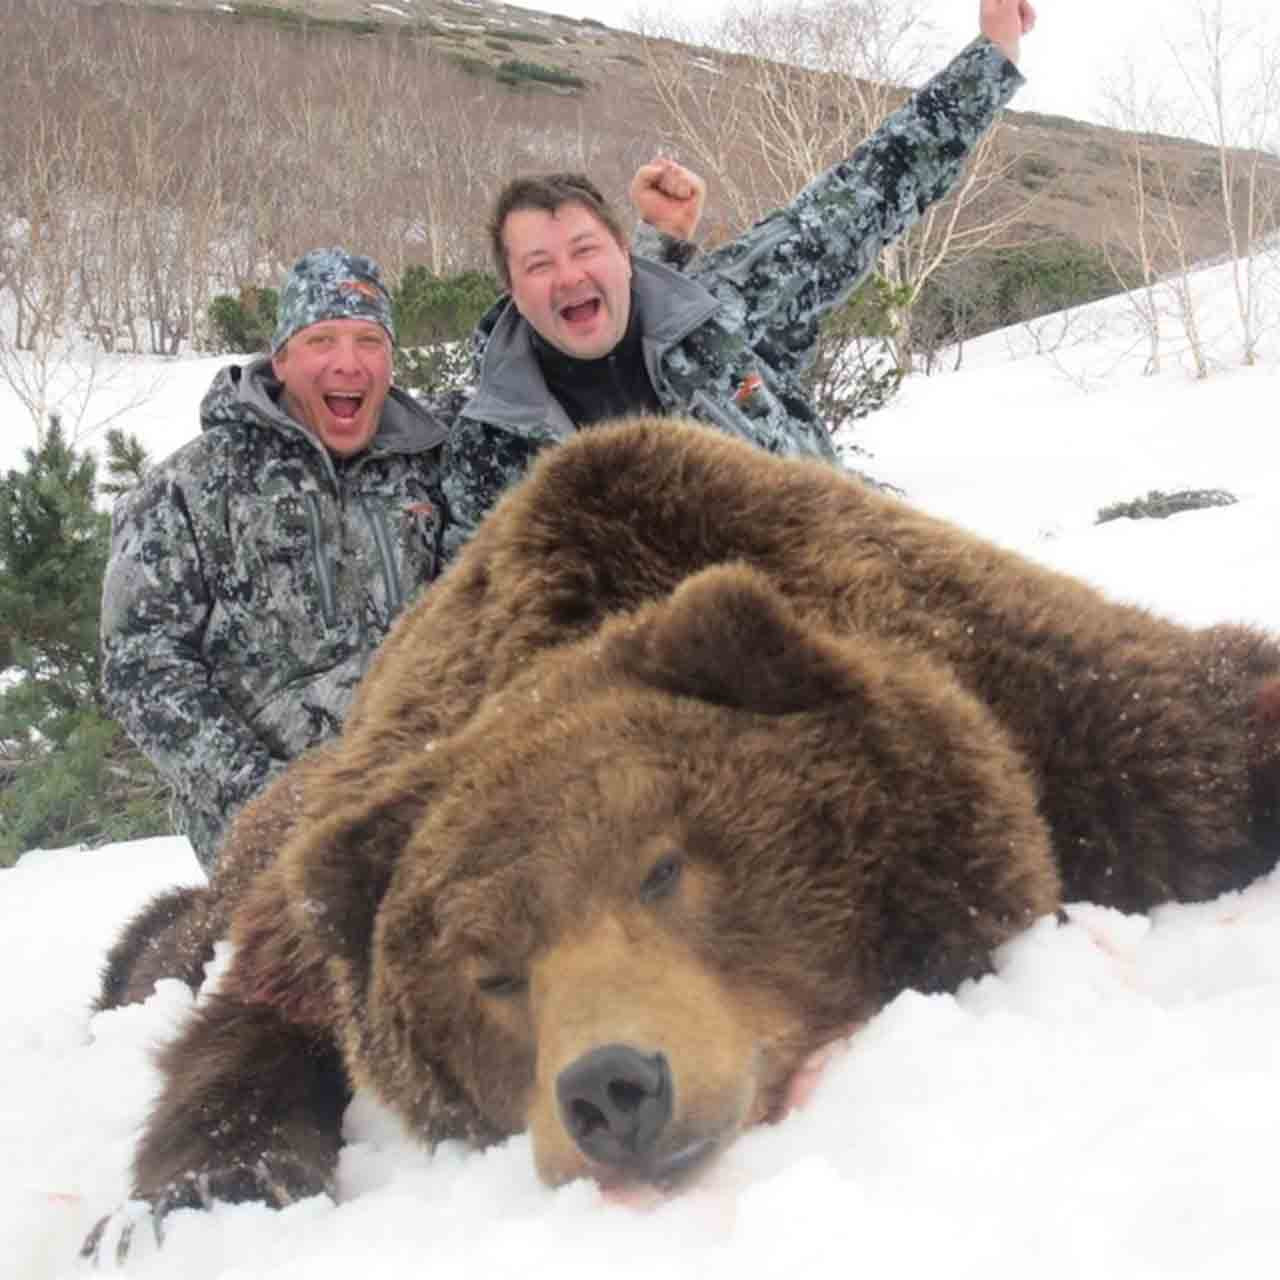 Kamchatka brown bear hunt in Russia